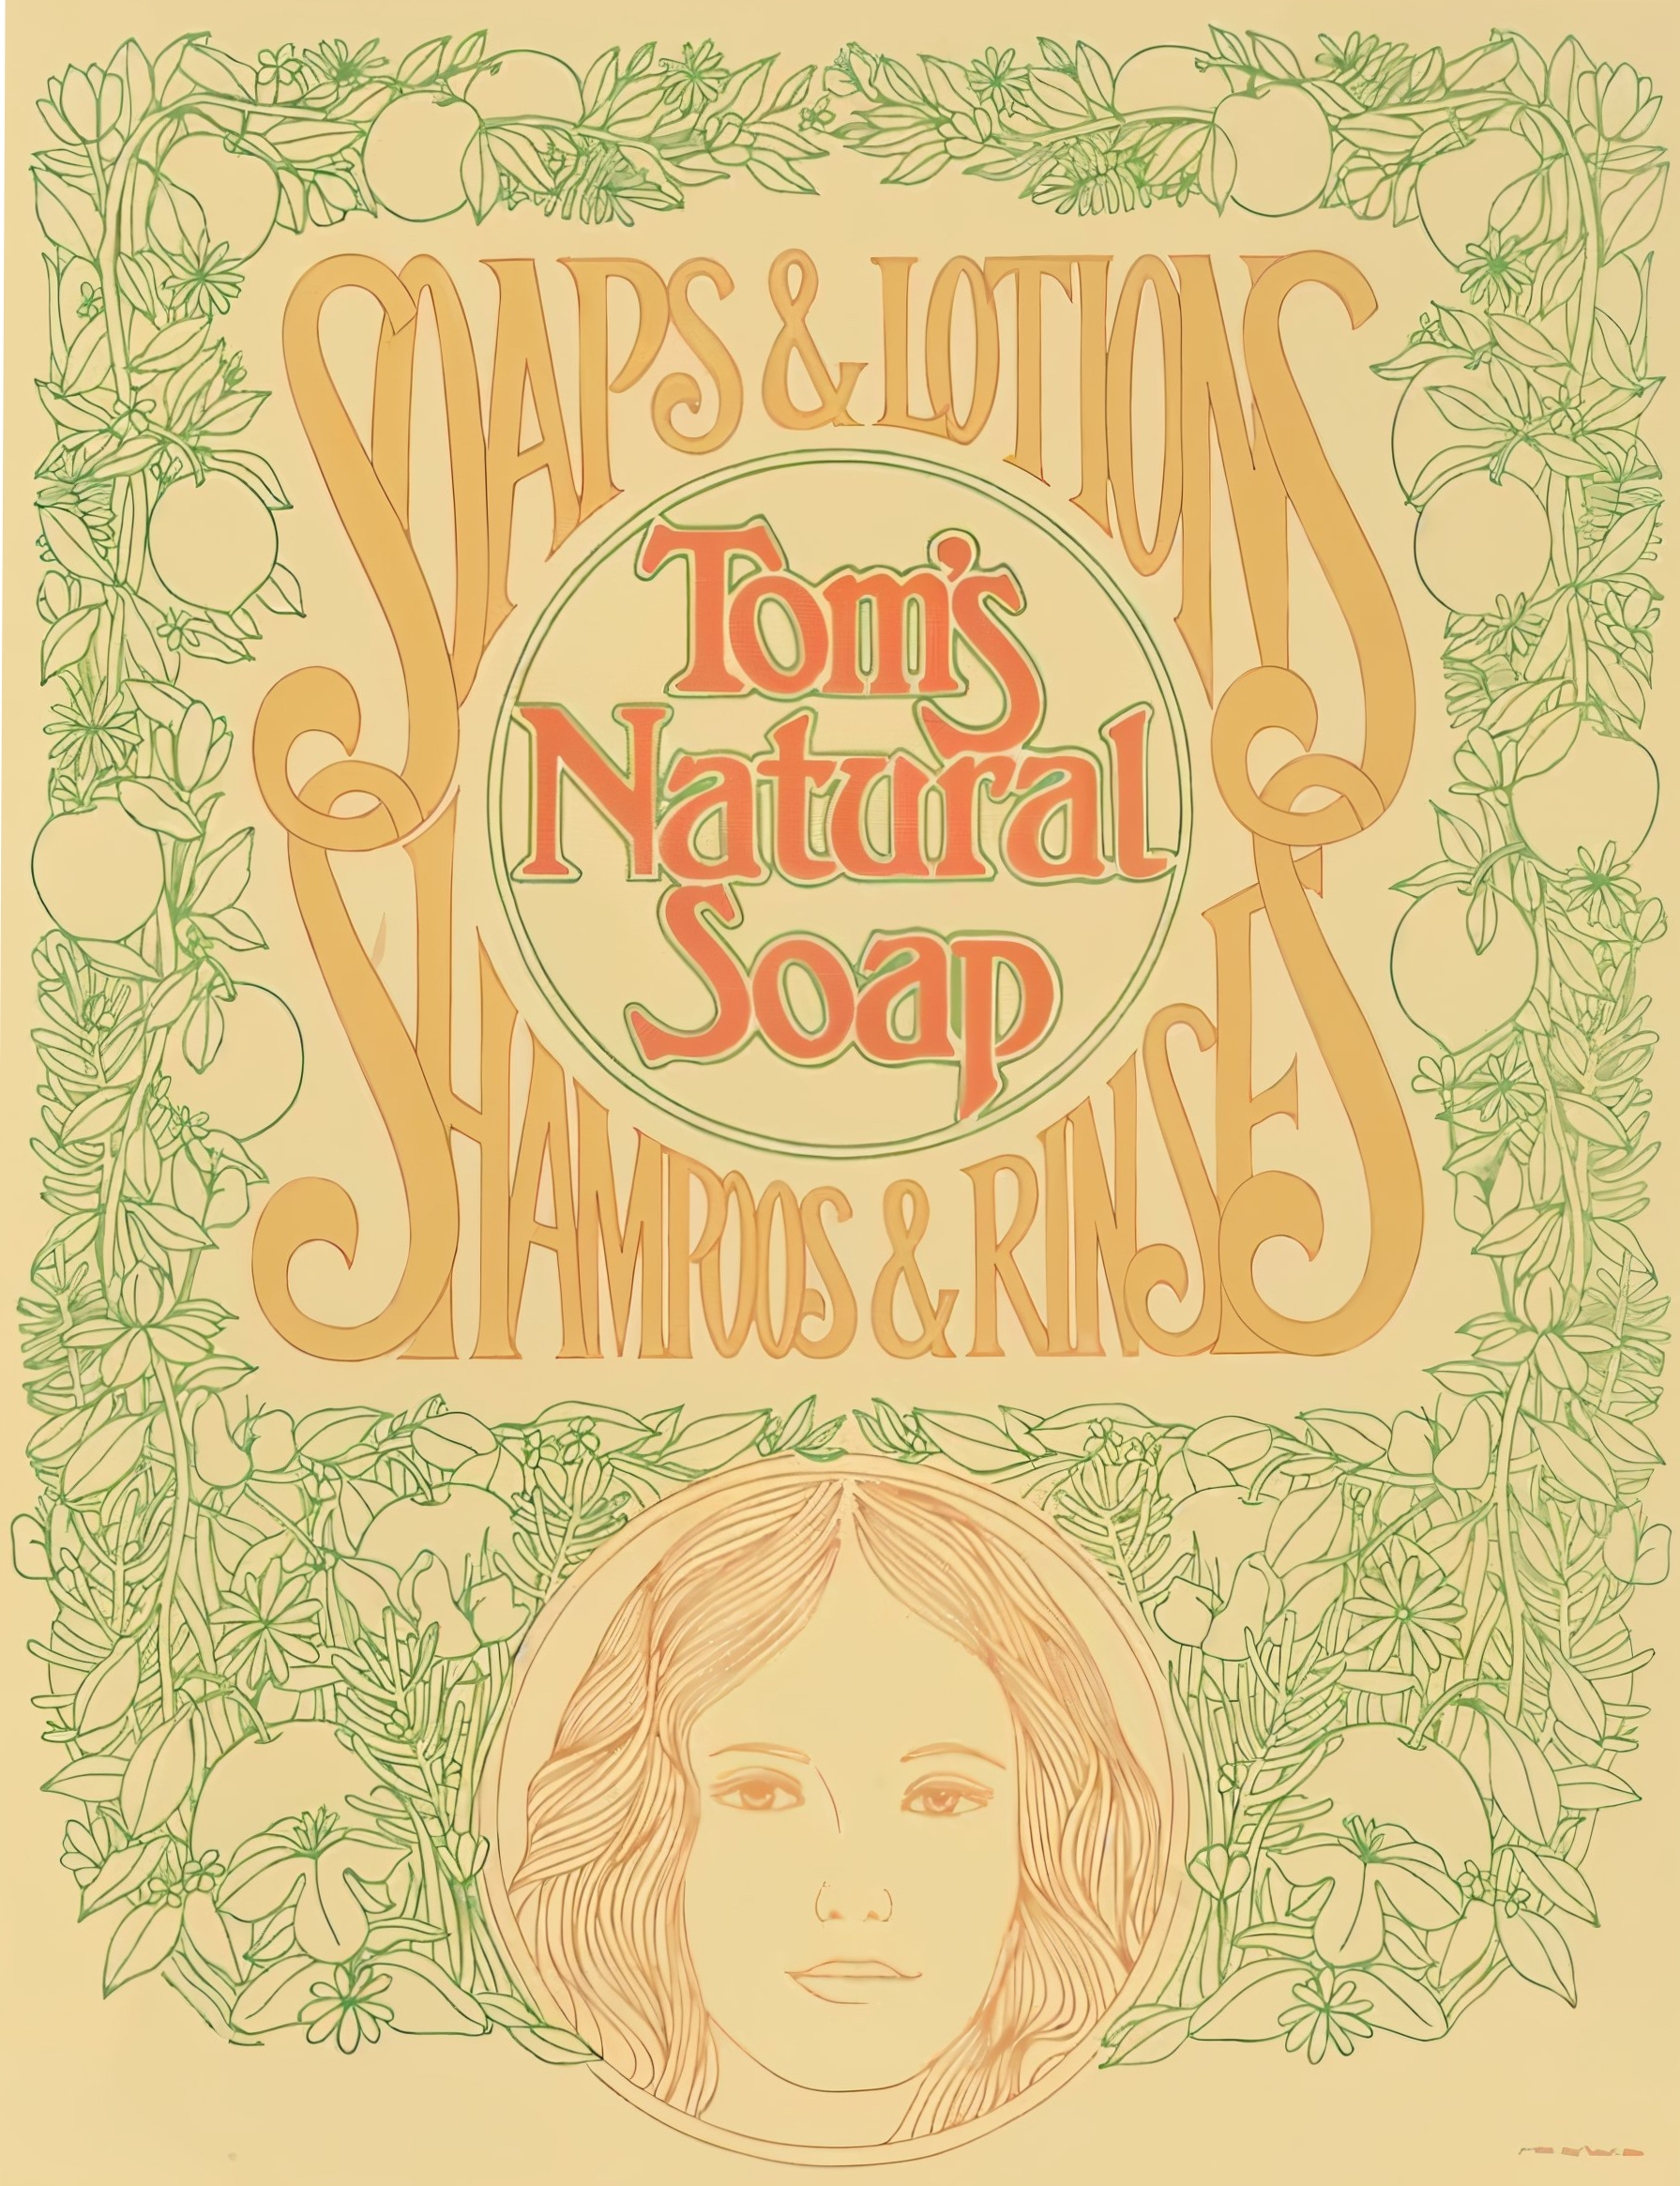 Tom’s of Maine, 1972